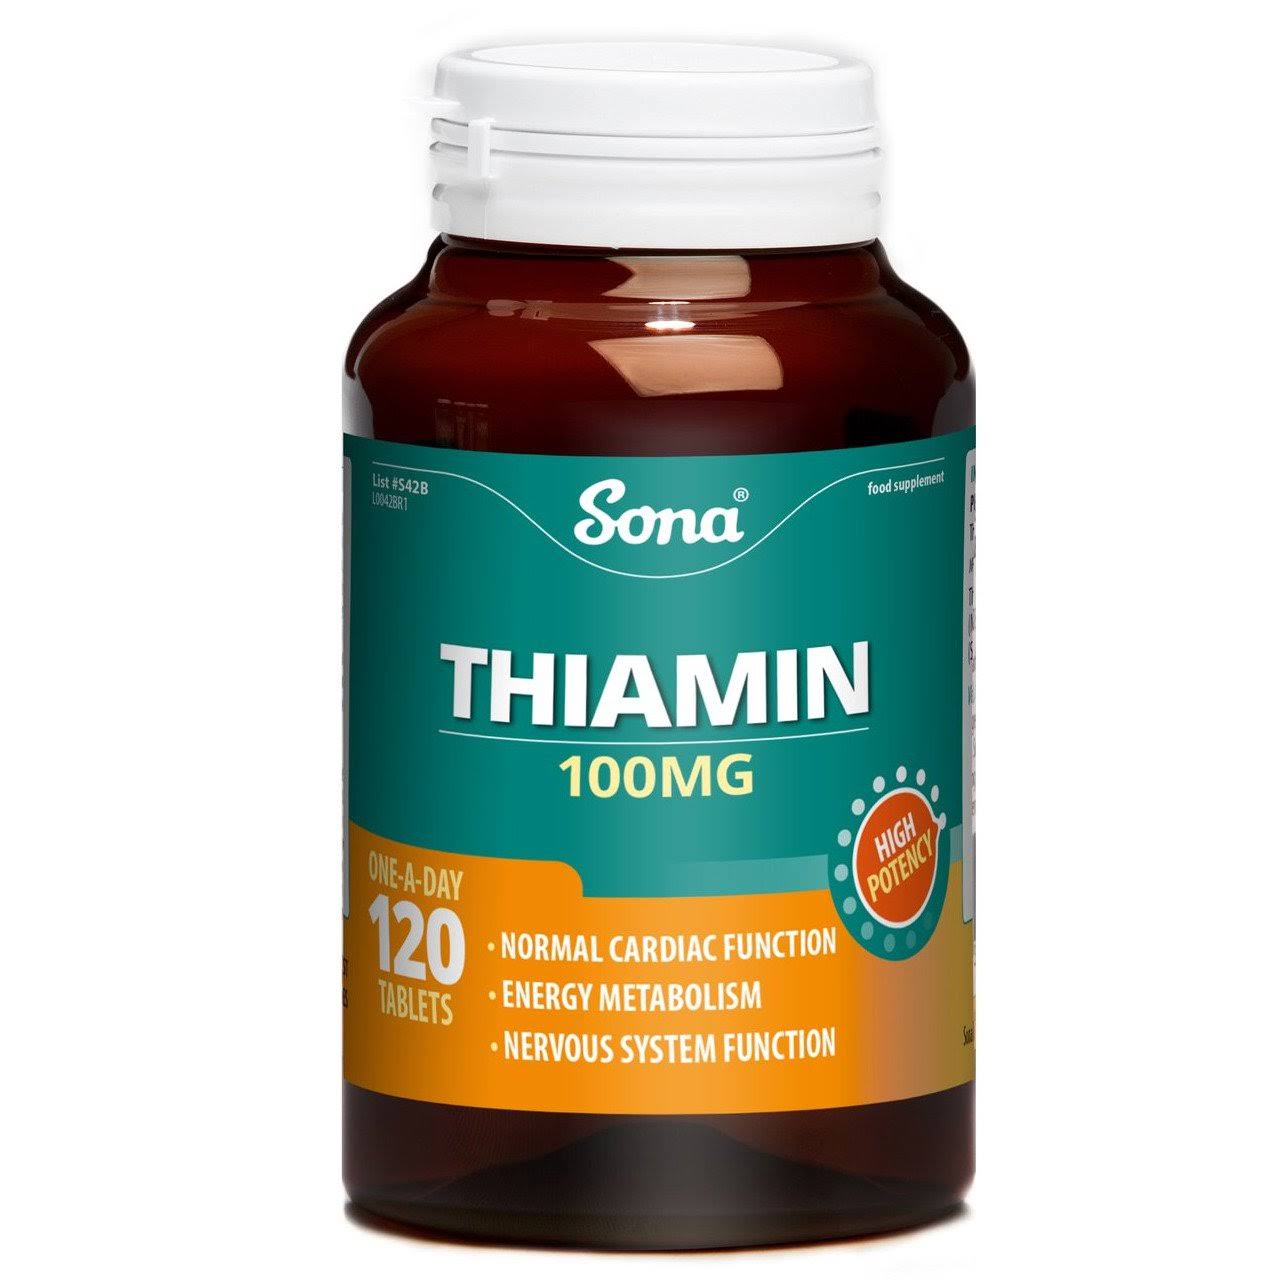 Sona Thiamin 100mg Vitamin B1 Tablets (120)